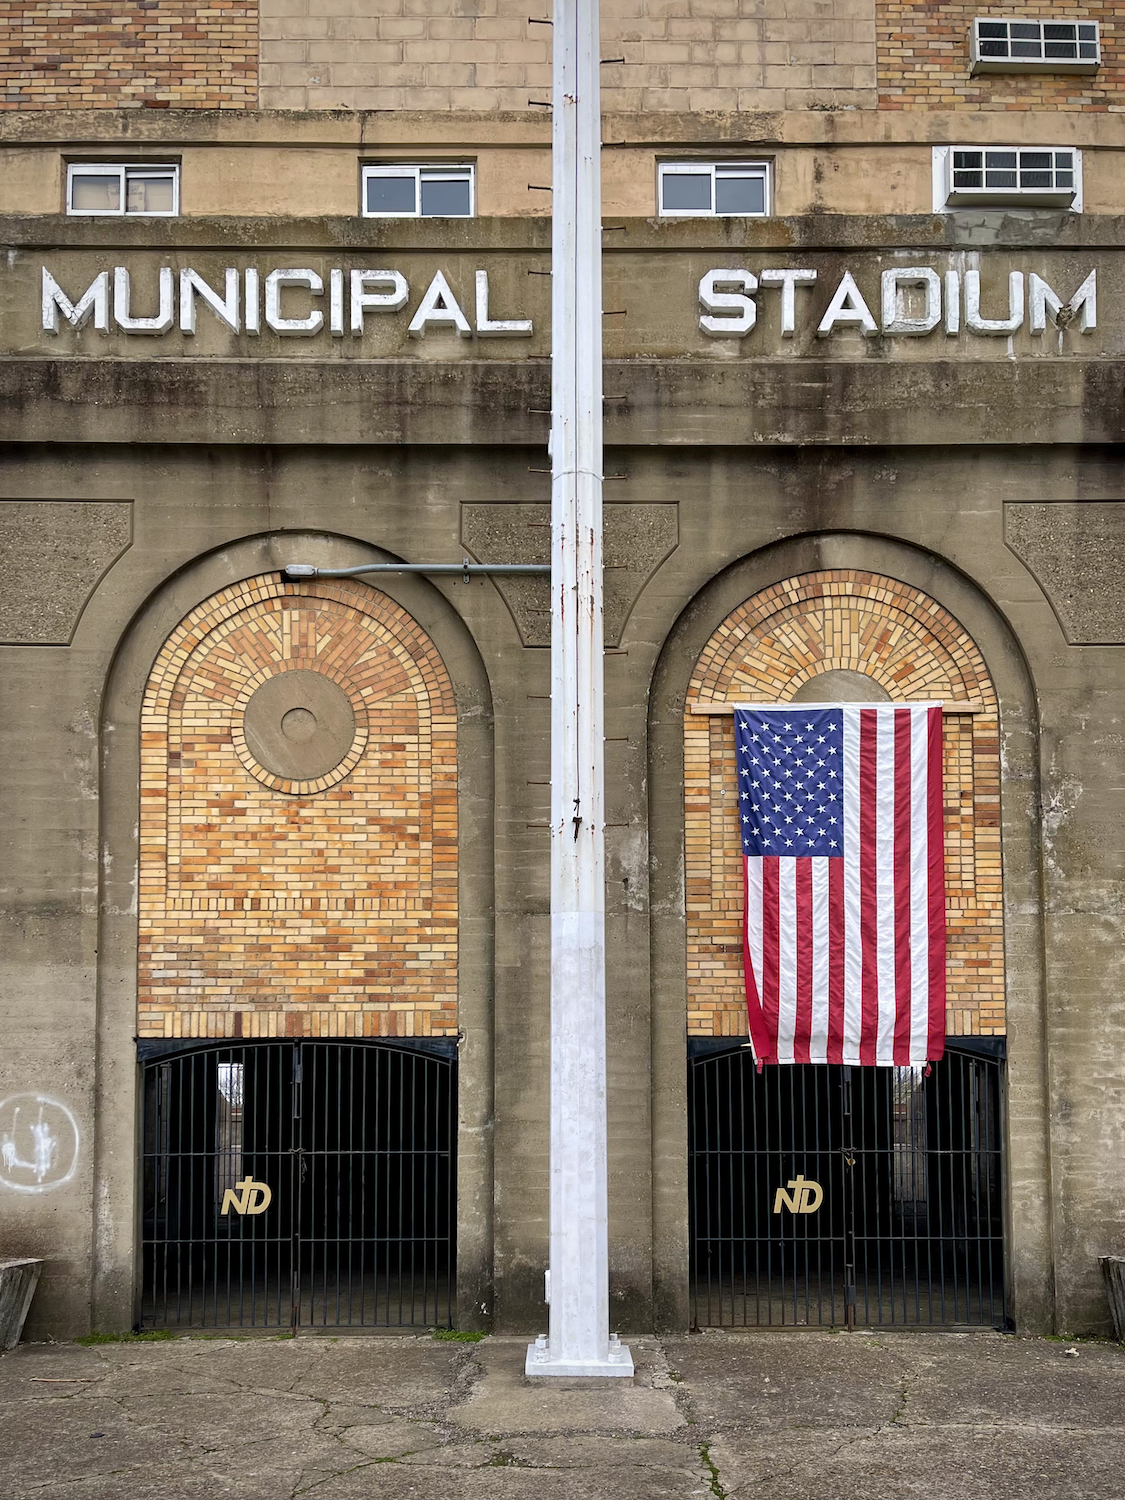 Main Entrance to Spartan-Municipal Stadium in Portsmouth, Ohio